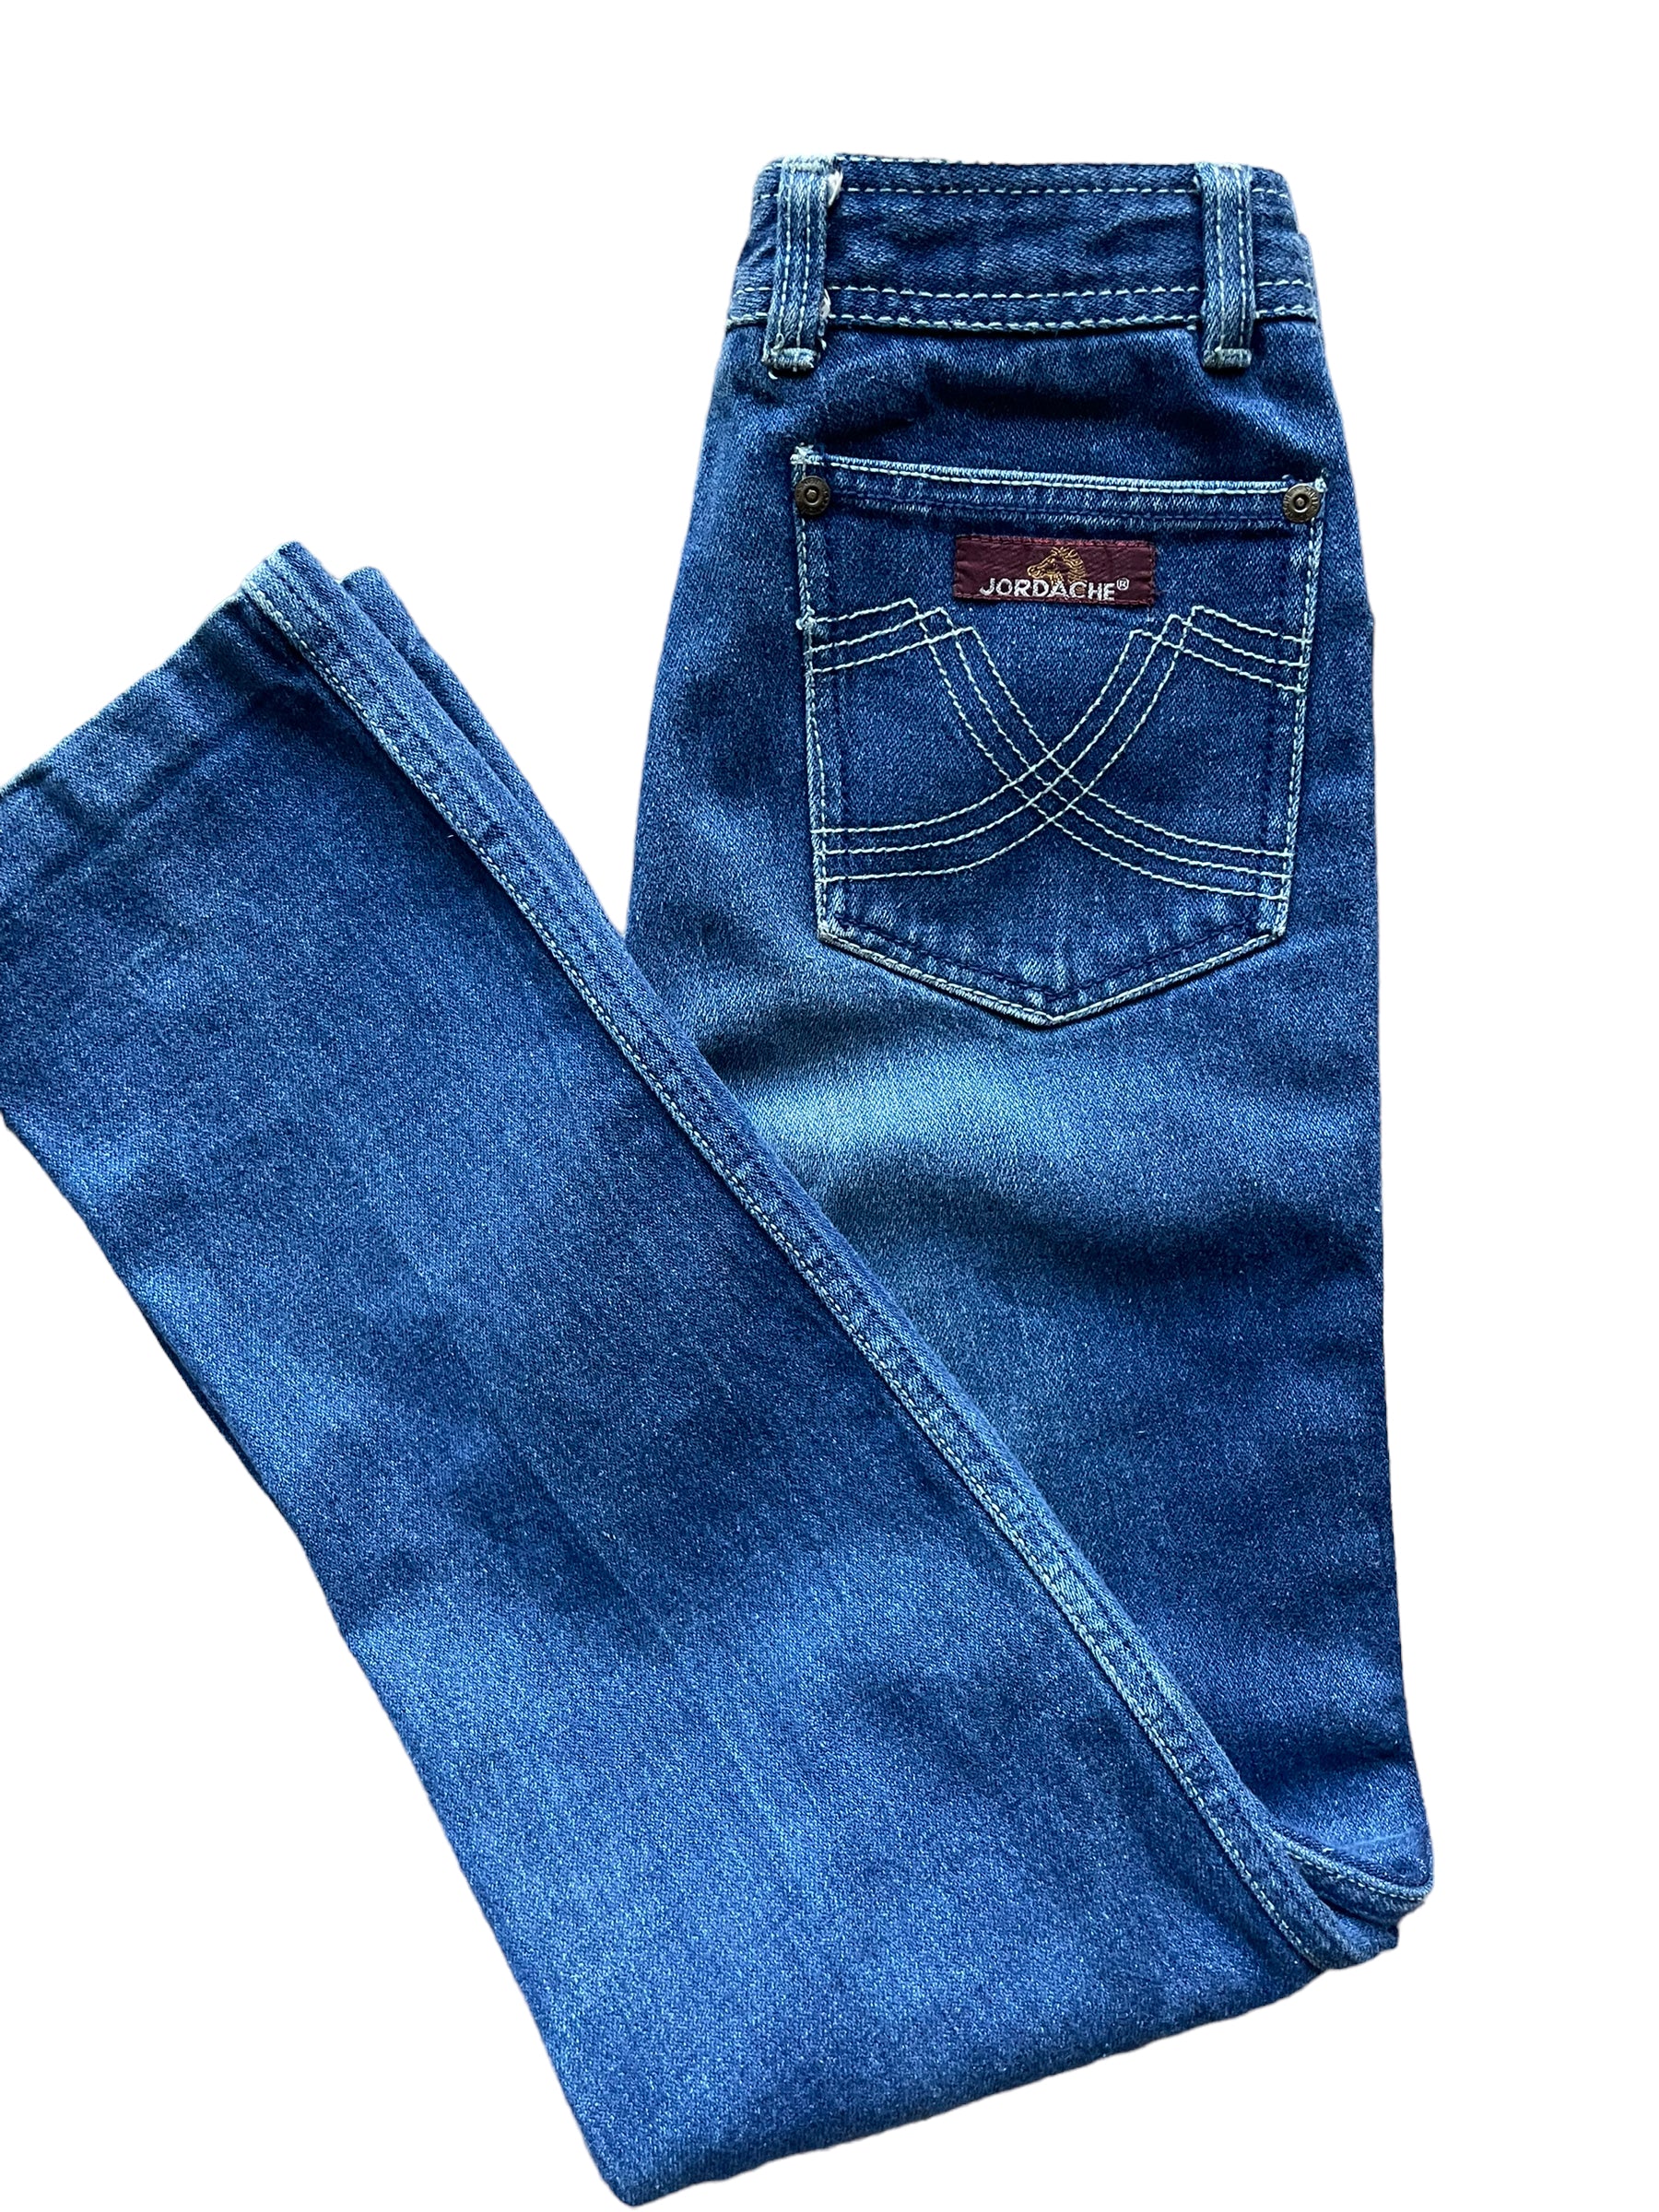 Vintage 1980s Jordache Jeans Sz SM, Barn Owl Vintage Seattle